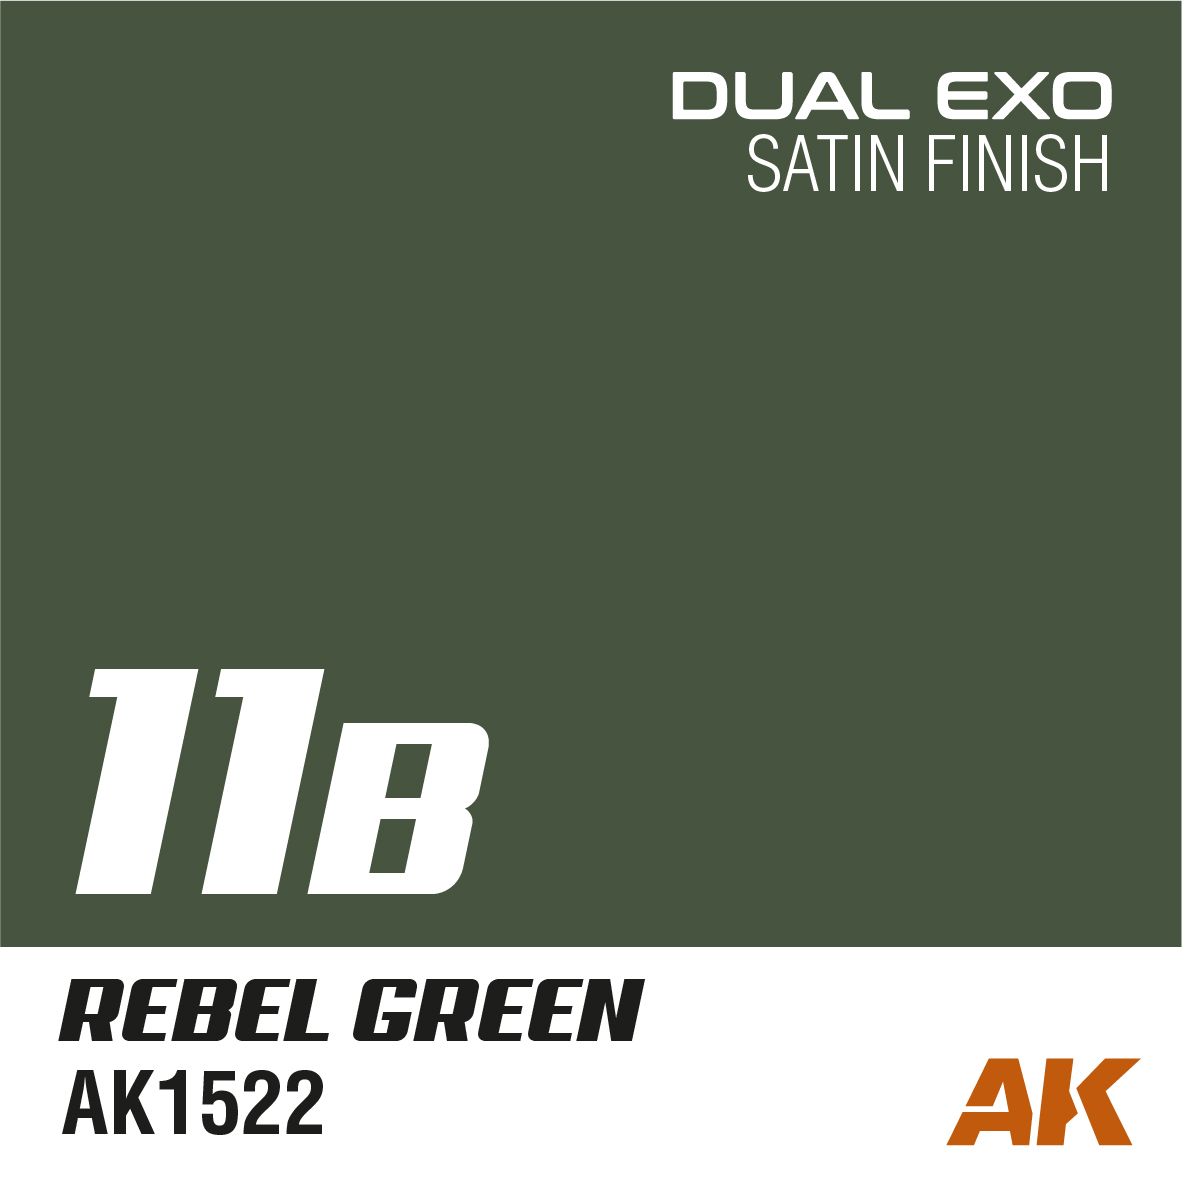 Dual Exo 11B - Rebel Green